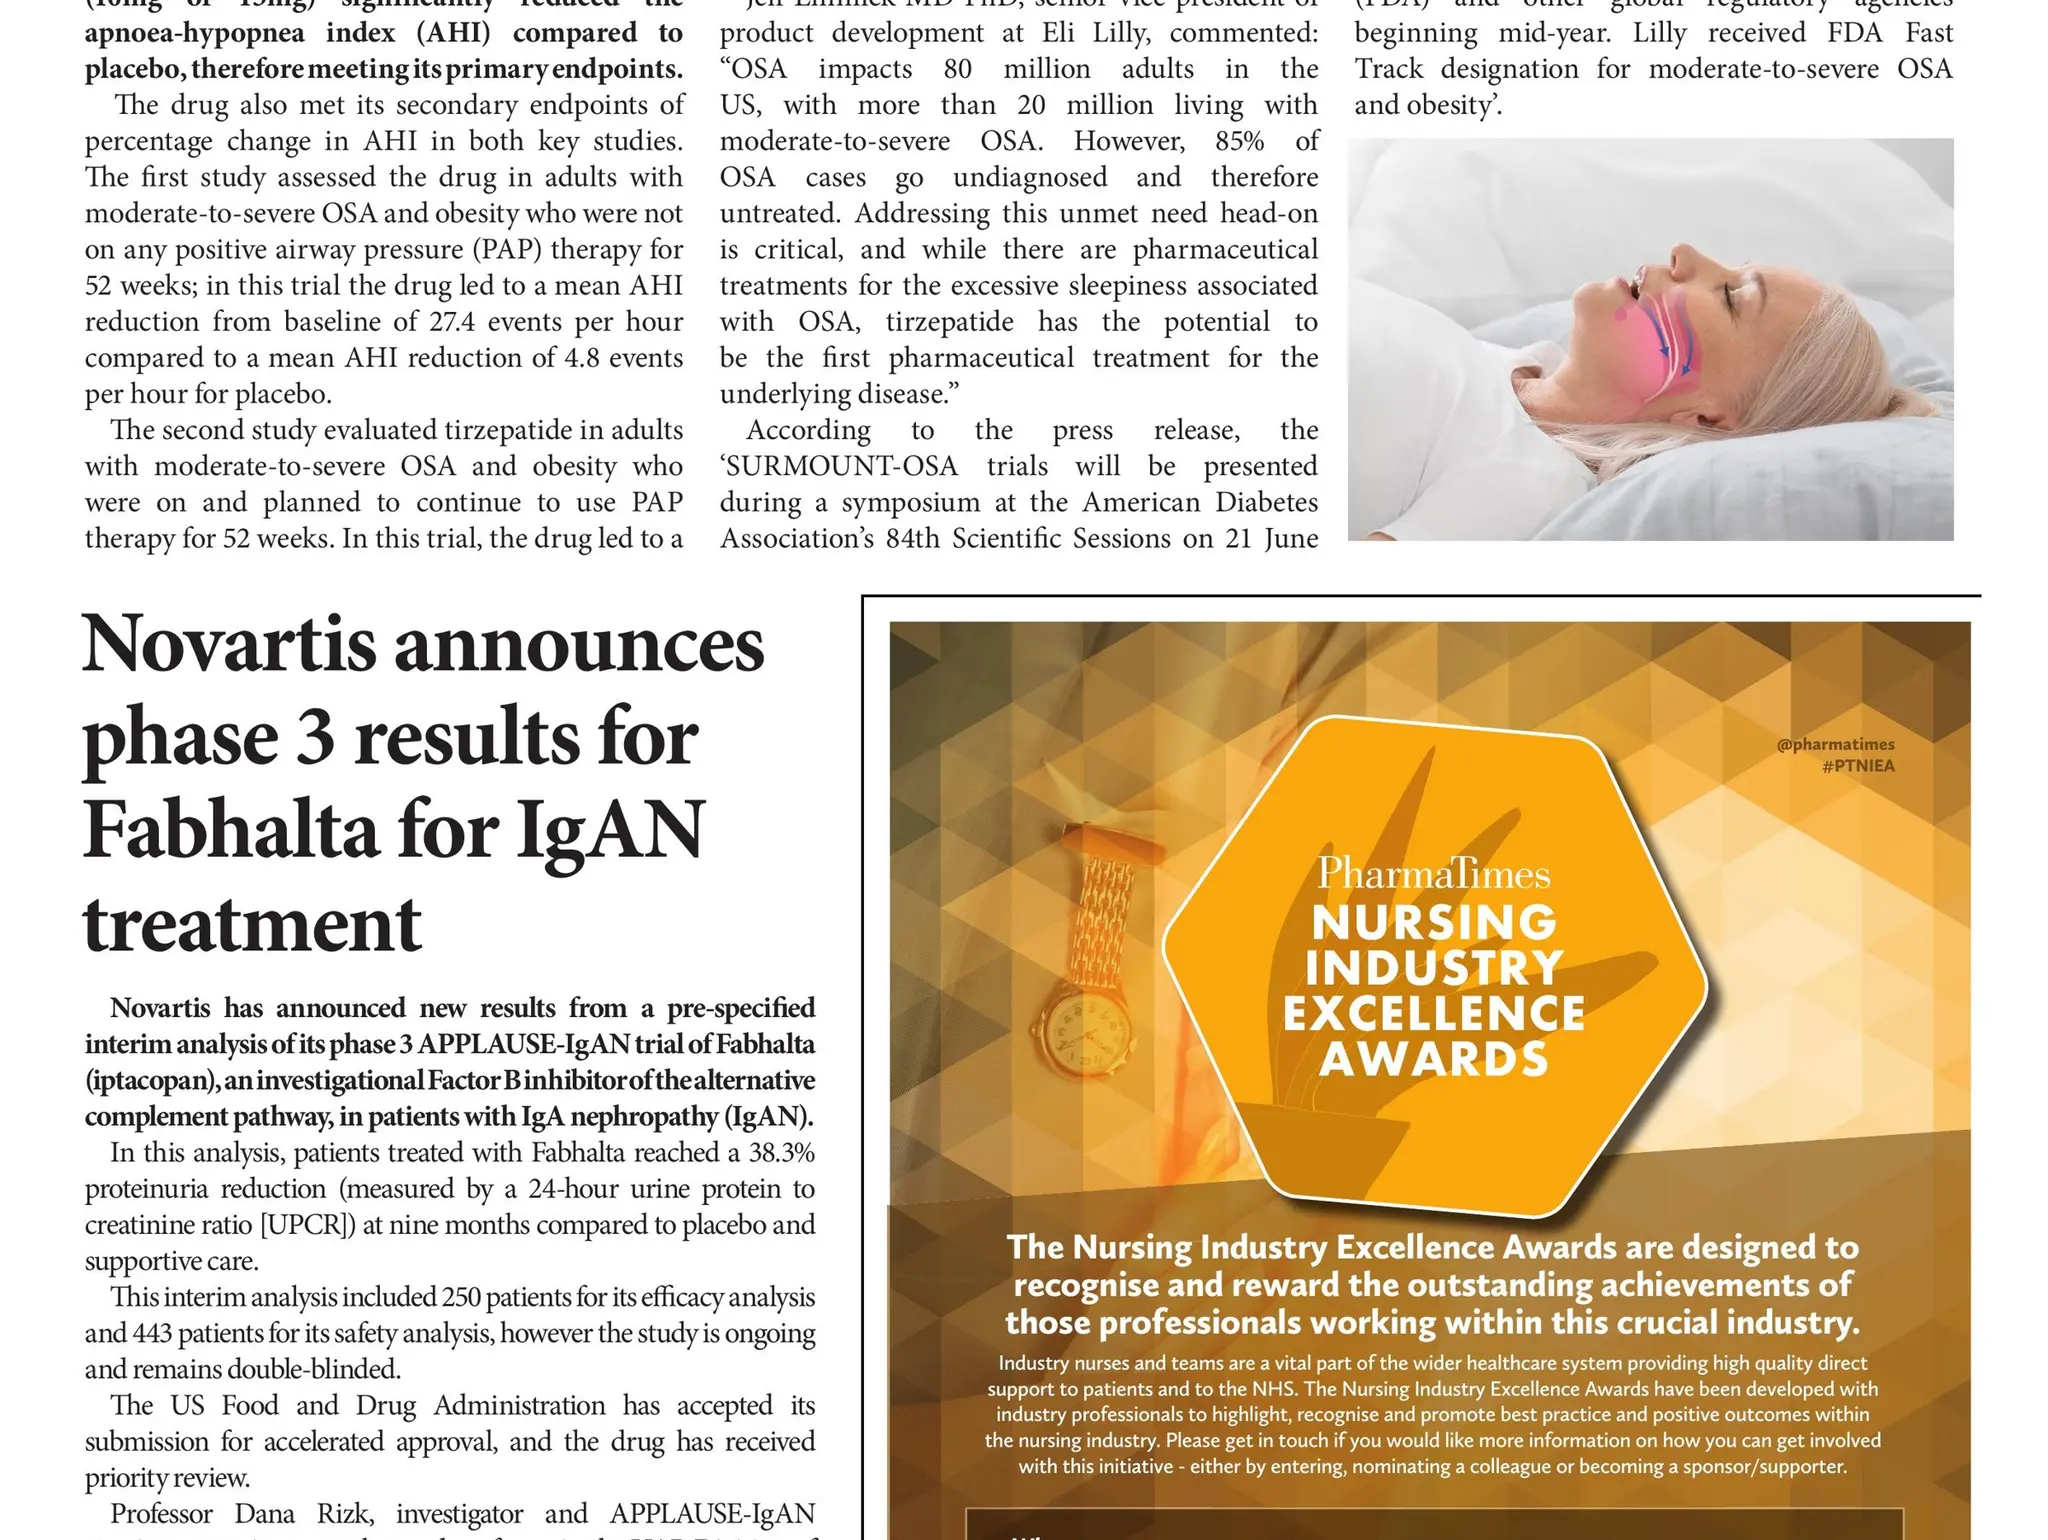 Novartis announces phase 3 results for Fabhalta for IgAN treatment